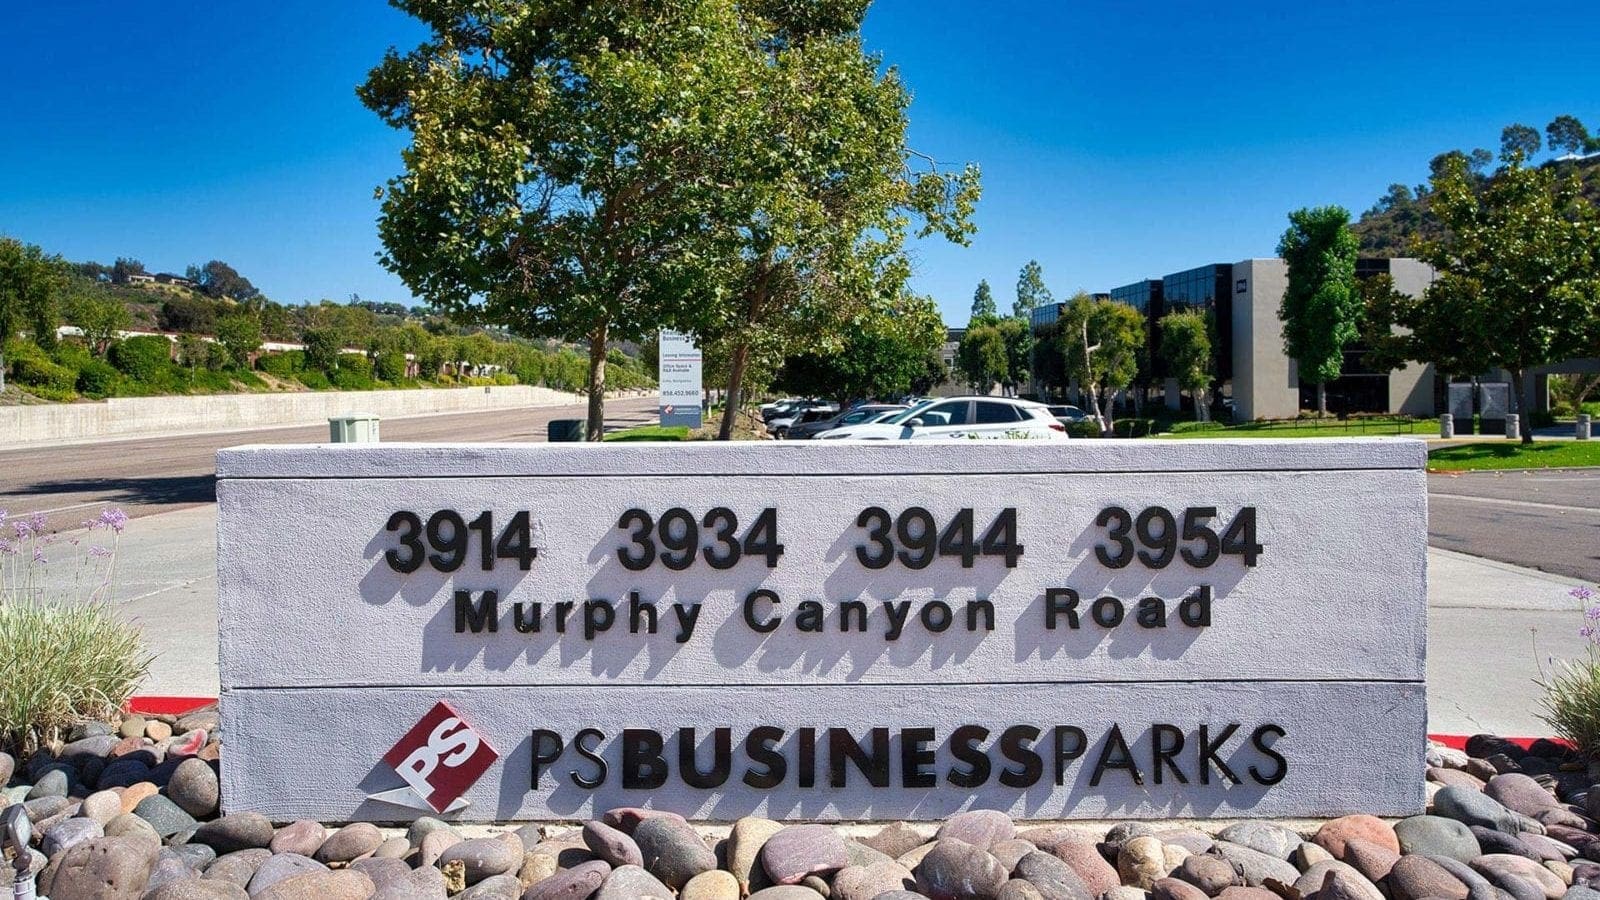 Kearny Mesa Business Park exterior entrance sign photo